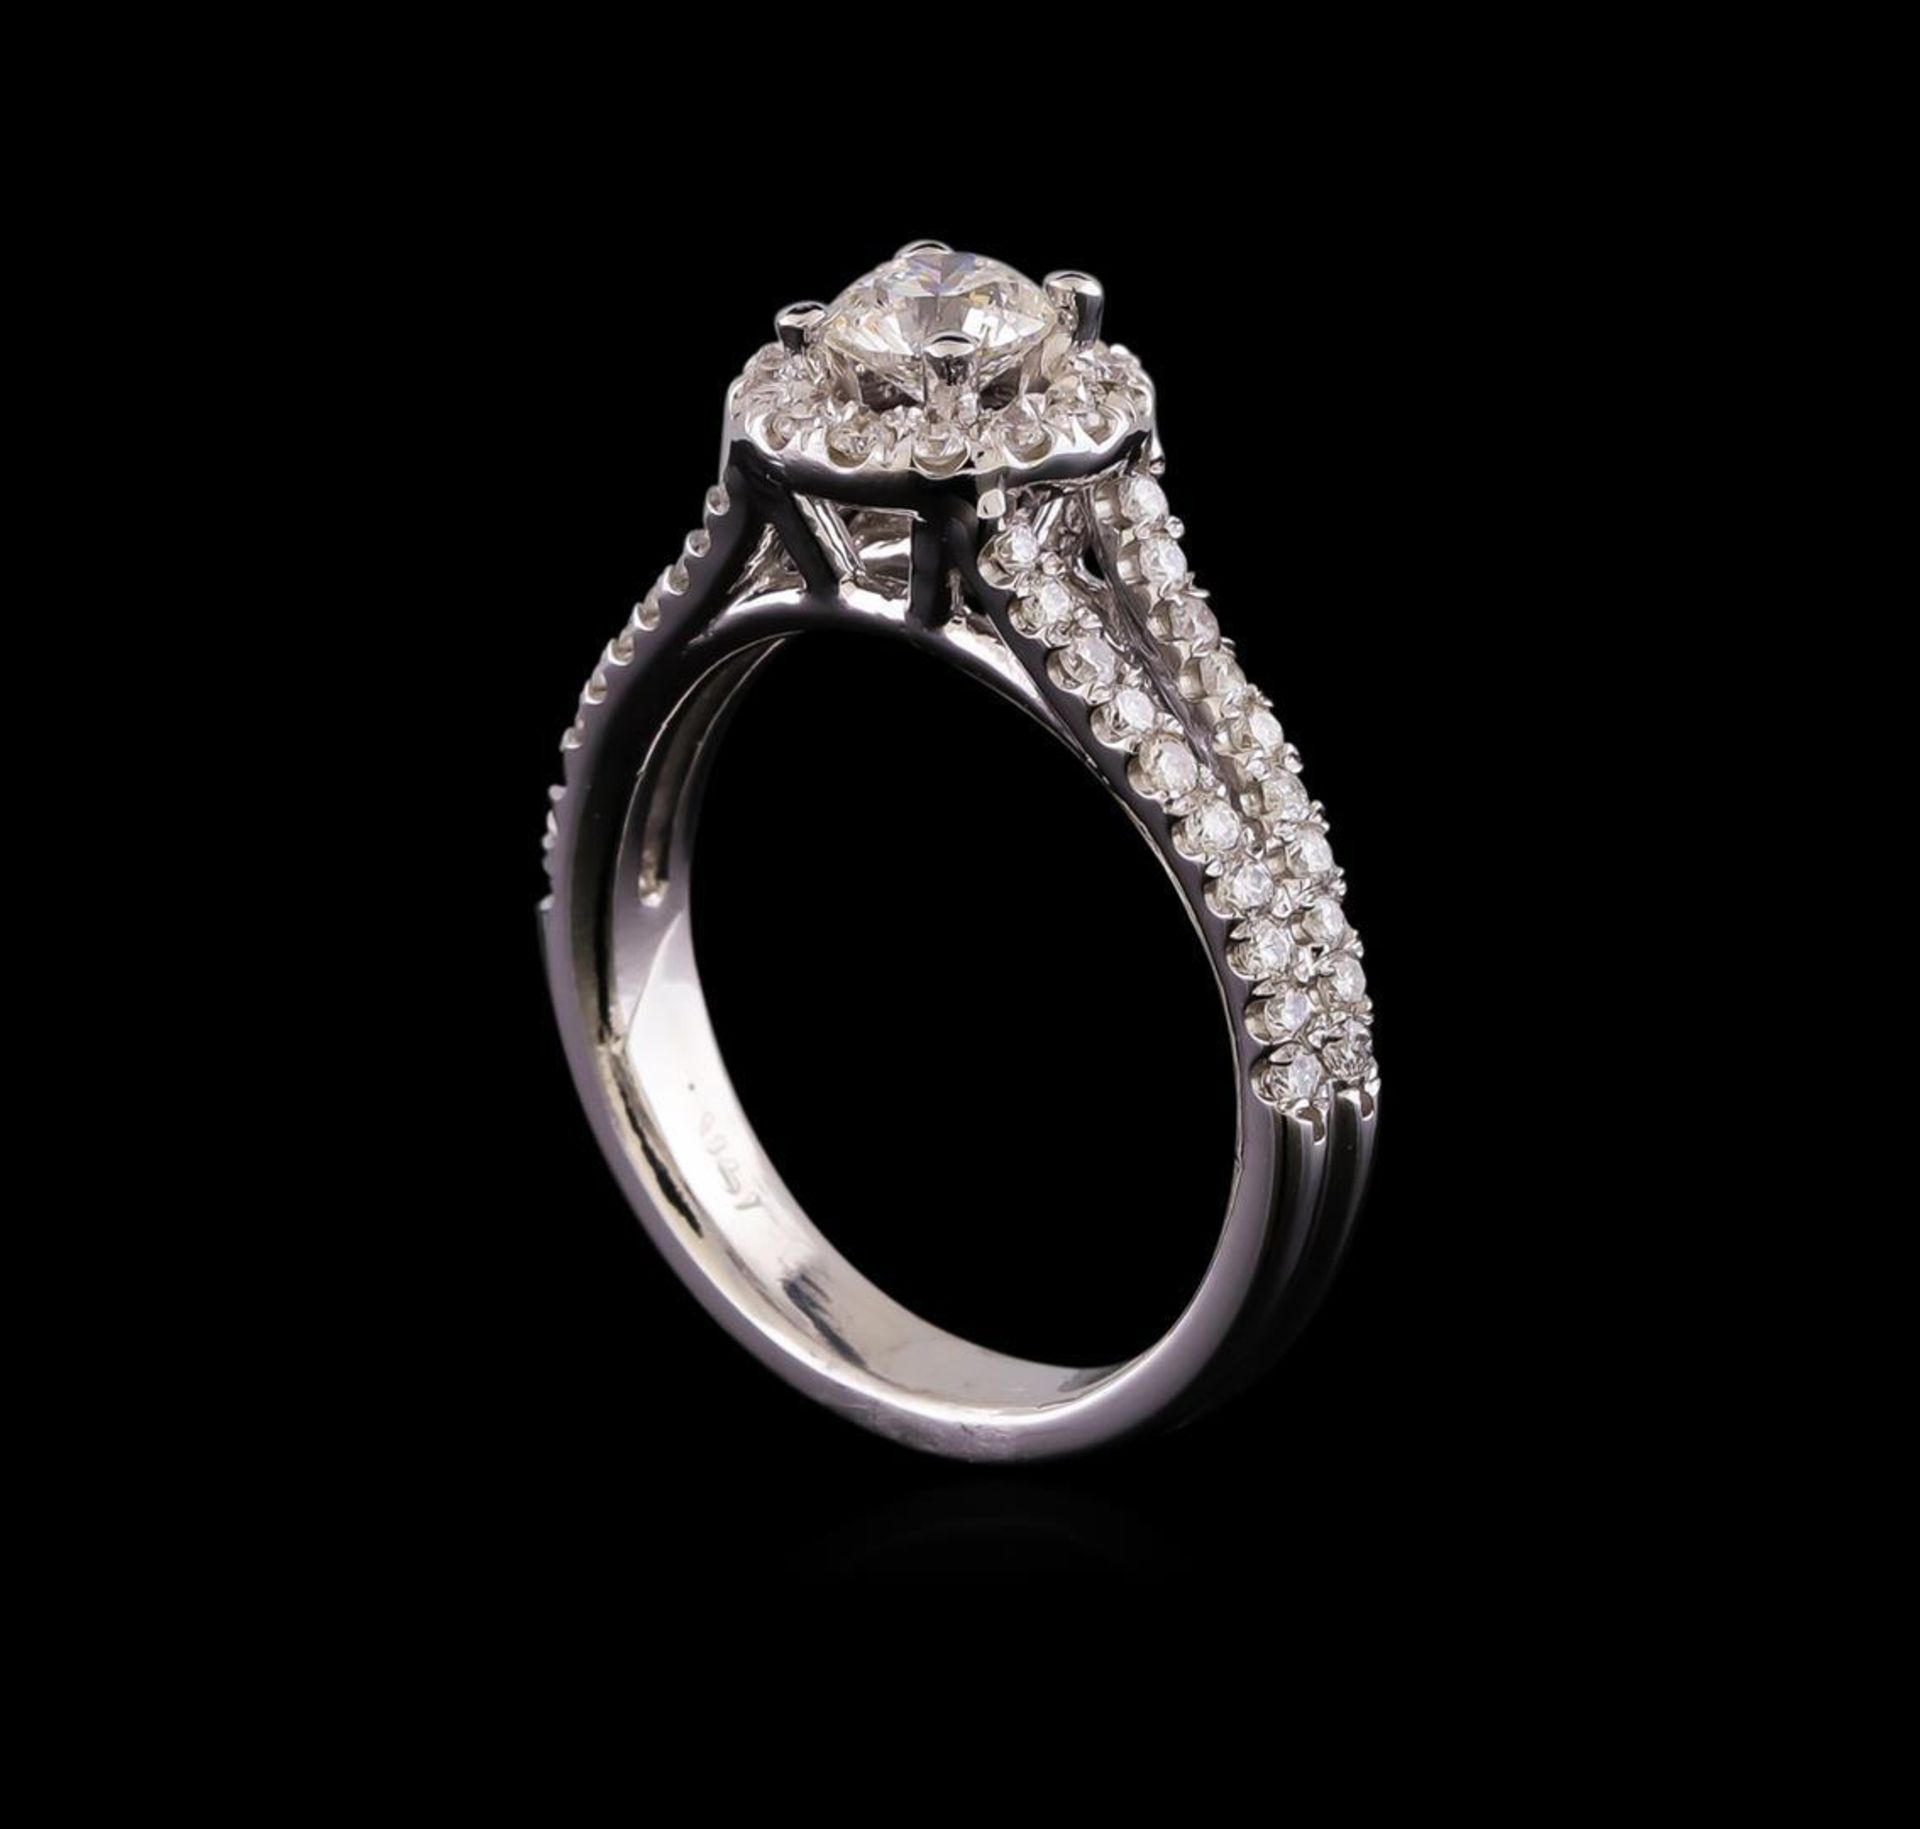 1.06 ctw Diamond Ring - 14KT White Gold - Image 4 of 5